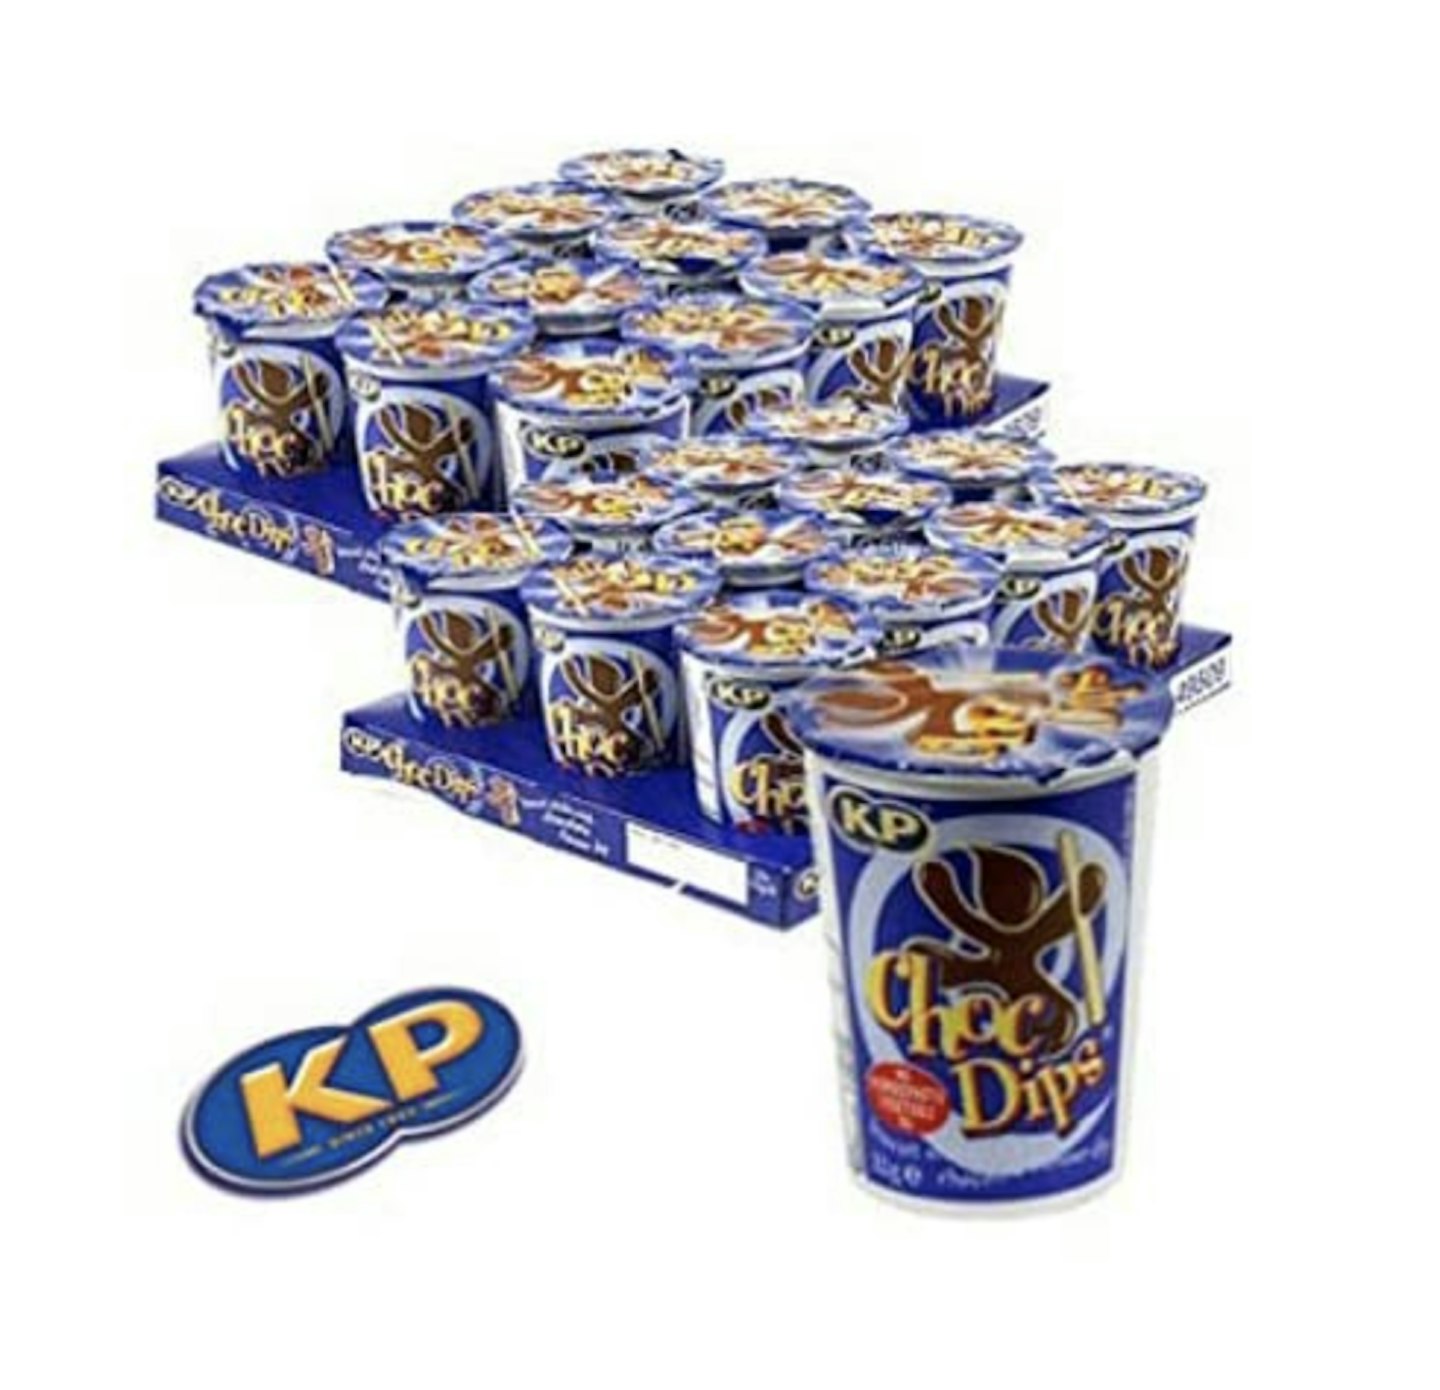 KP Choc Dips Milk Chocolate Case of 24 Pots